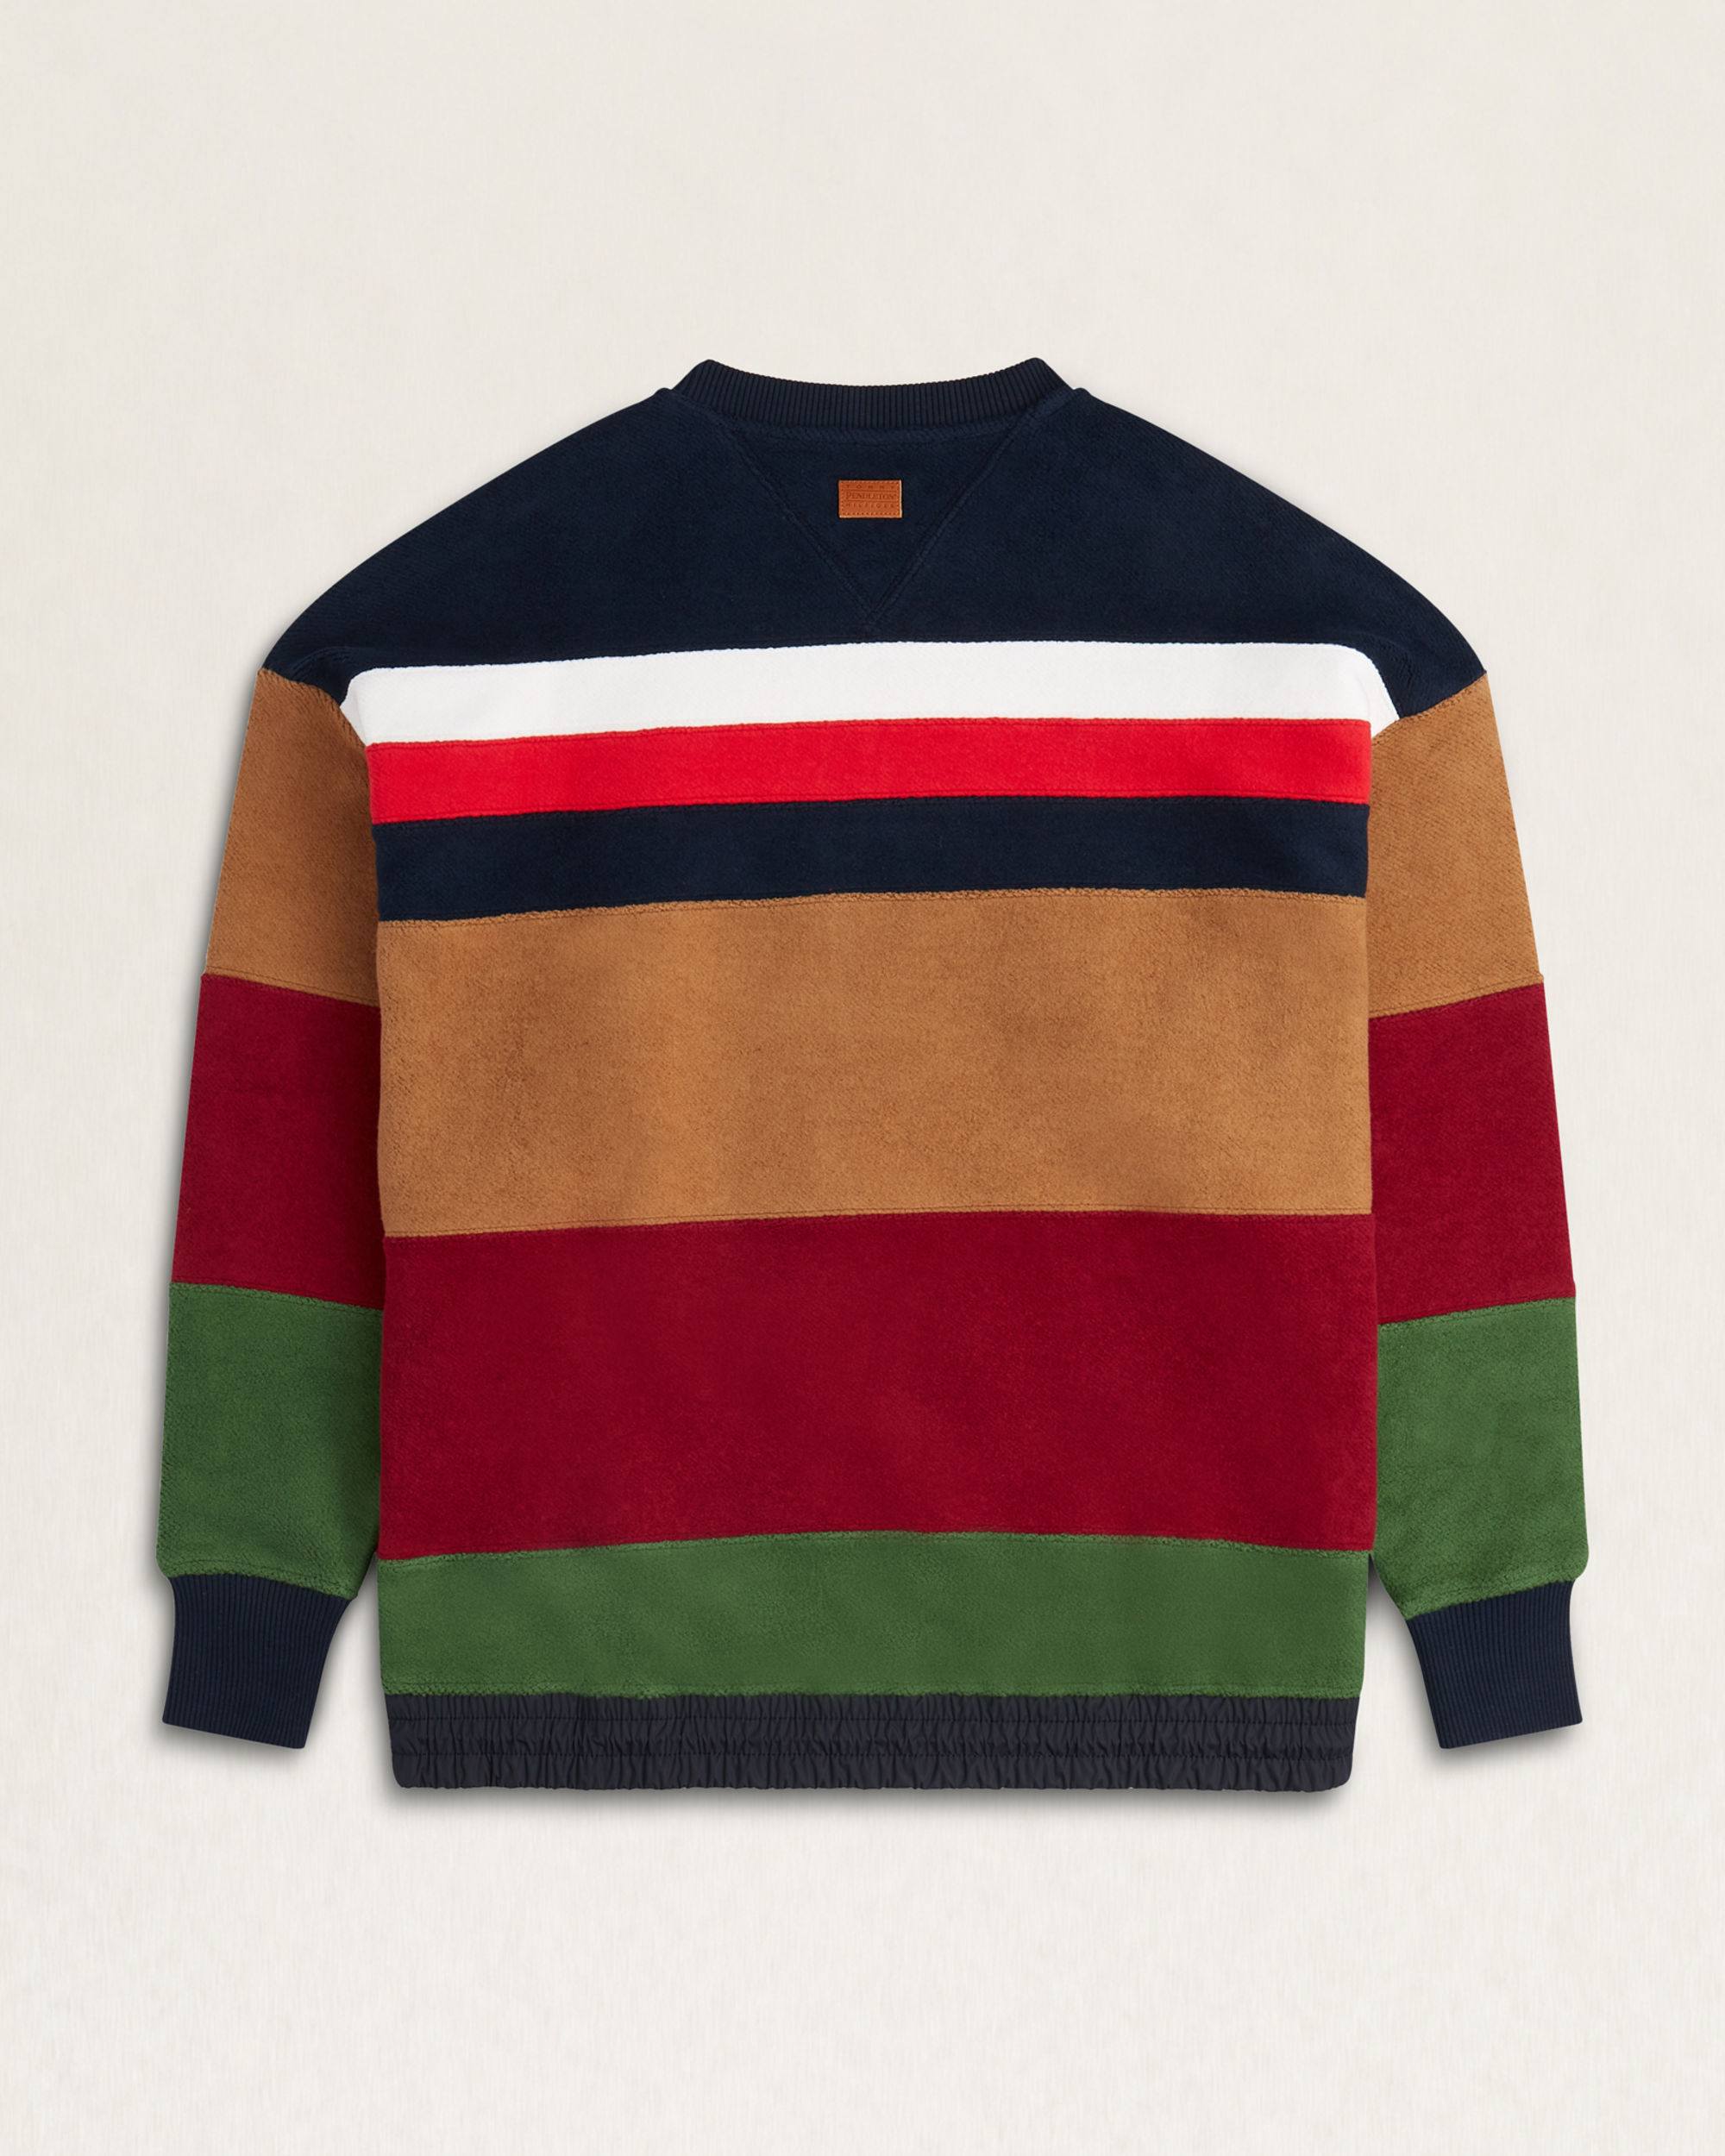 Hilfiger Crewneck Sweater